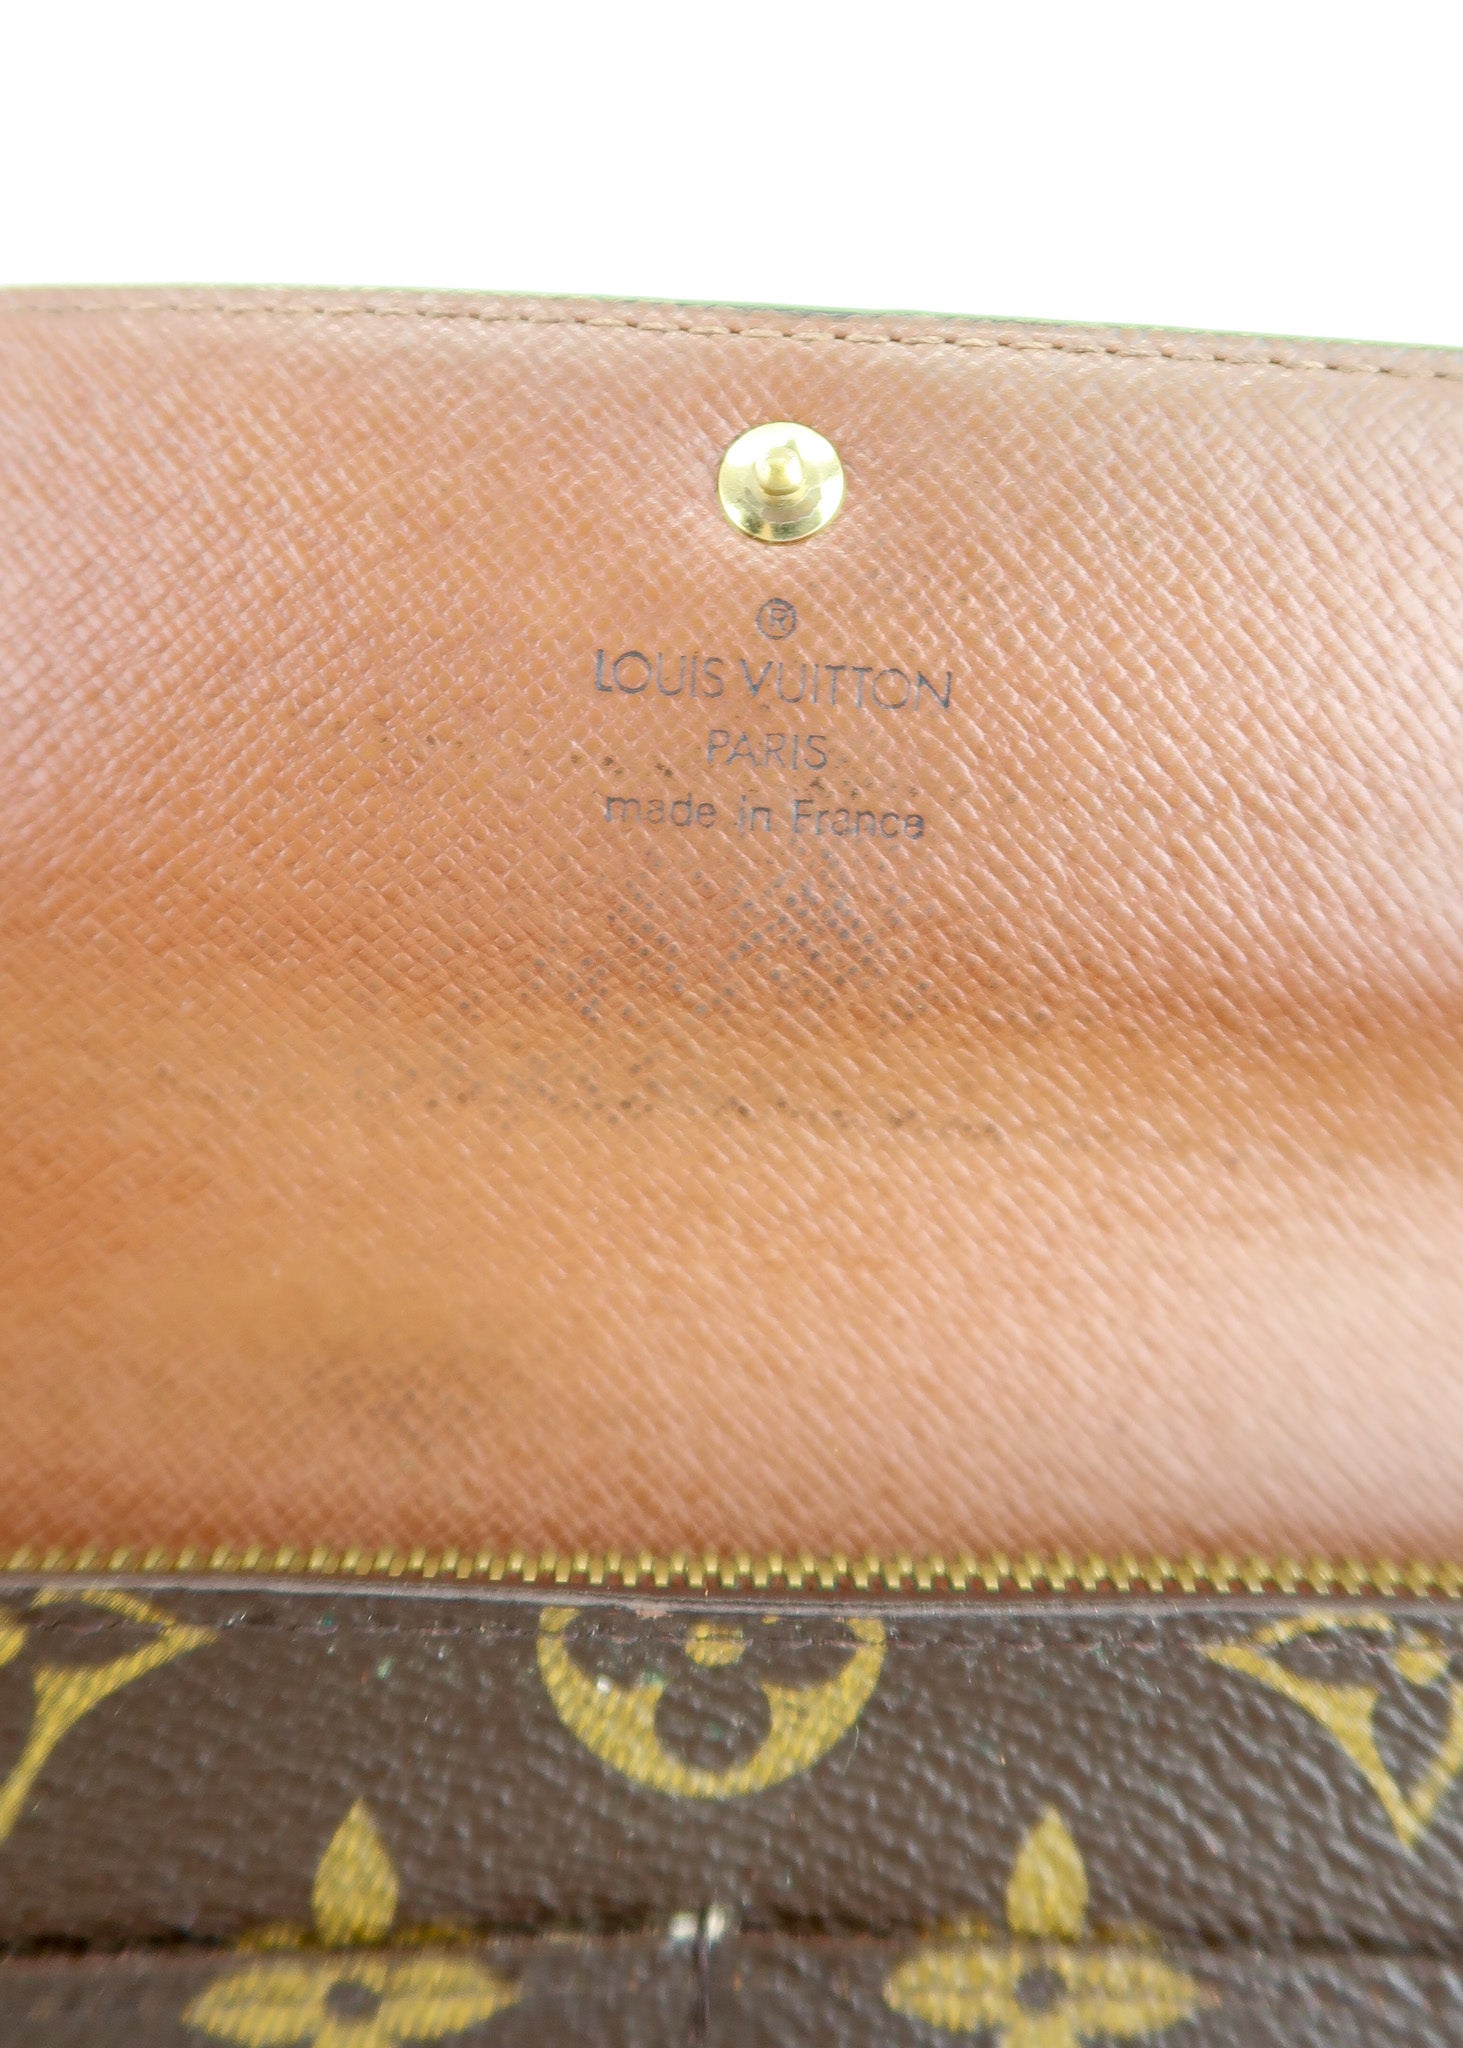 Louis Vuitton Sarah GM Long Wallet